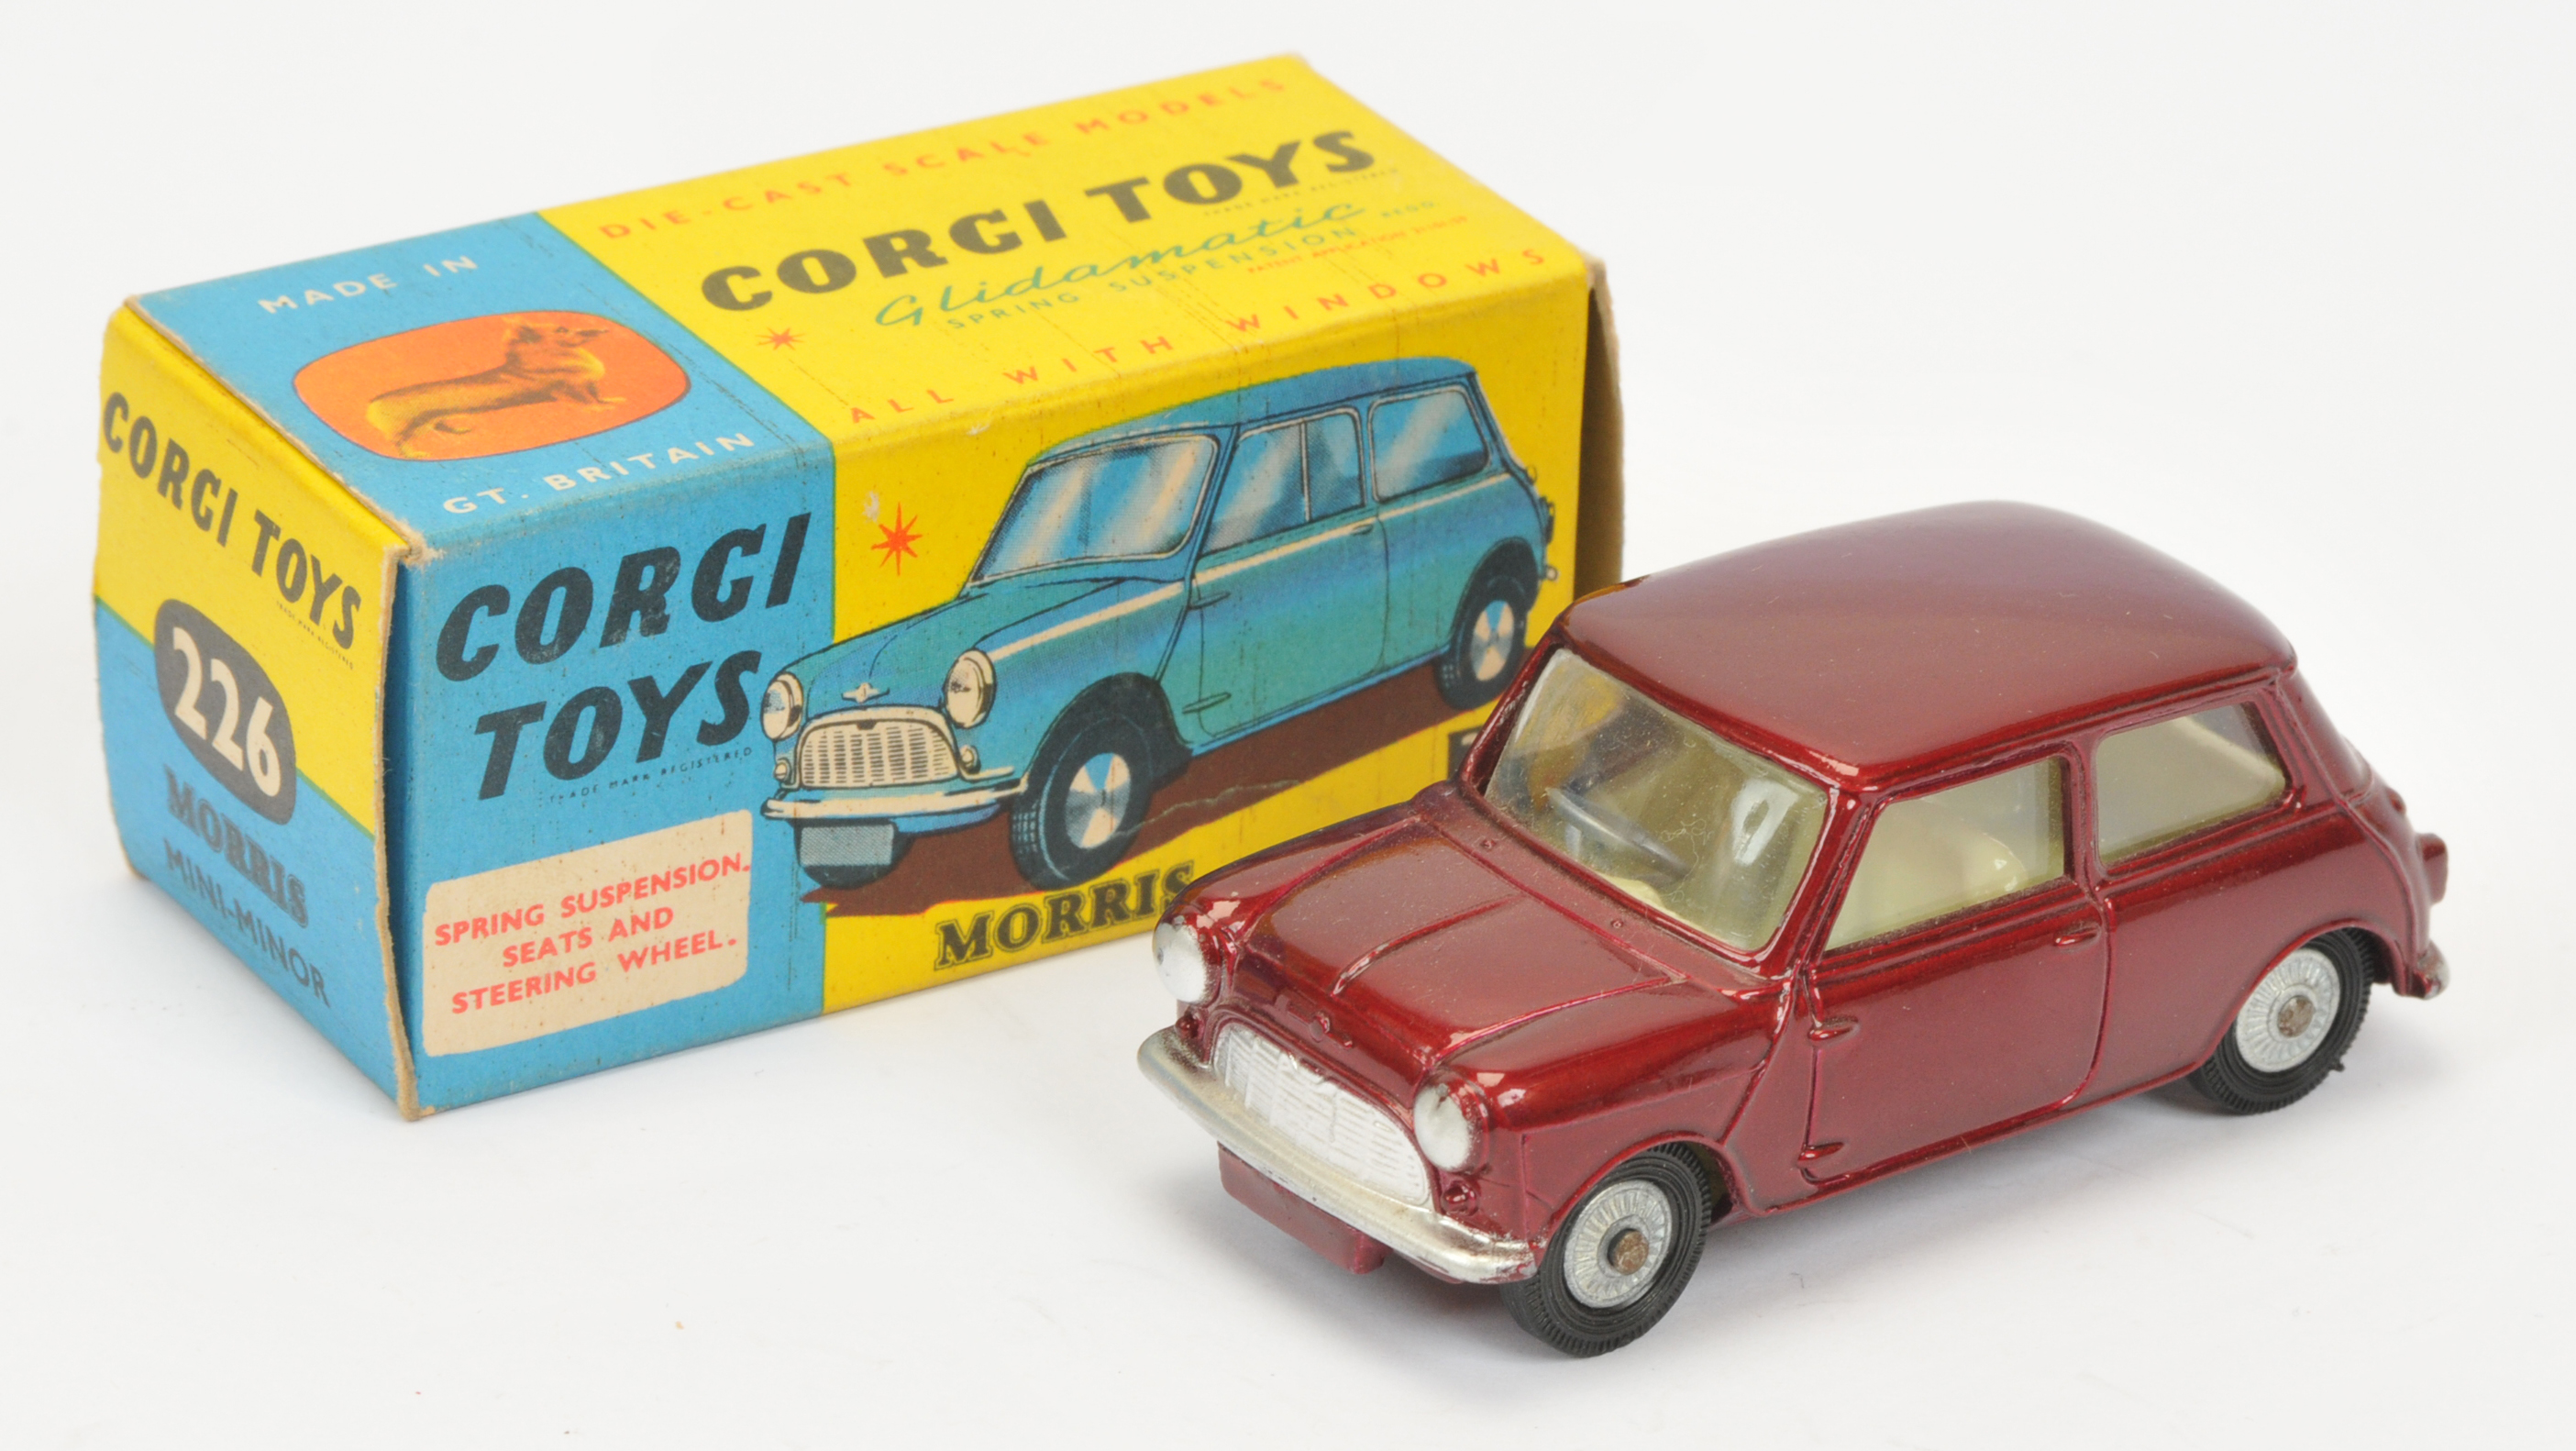 Corgi Toys 226 Morris Mini Minor - Metallic maroon, lemon interior, silver trim and cast hubs